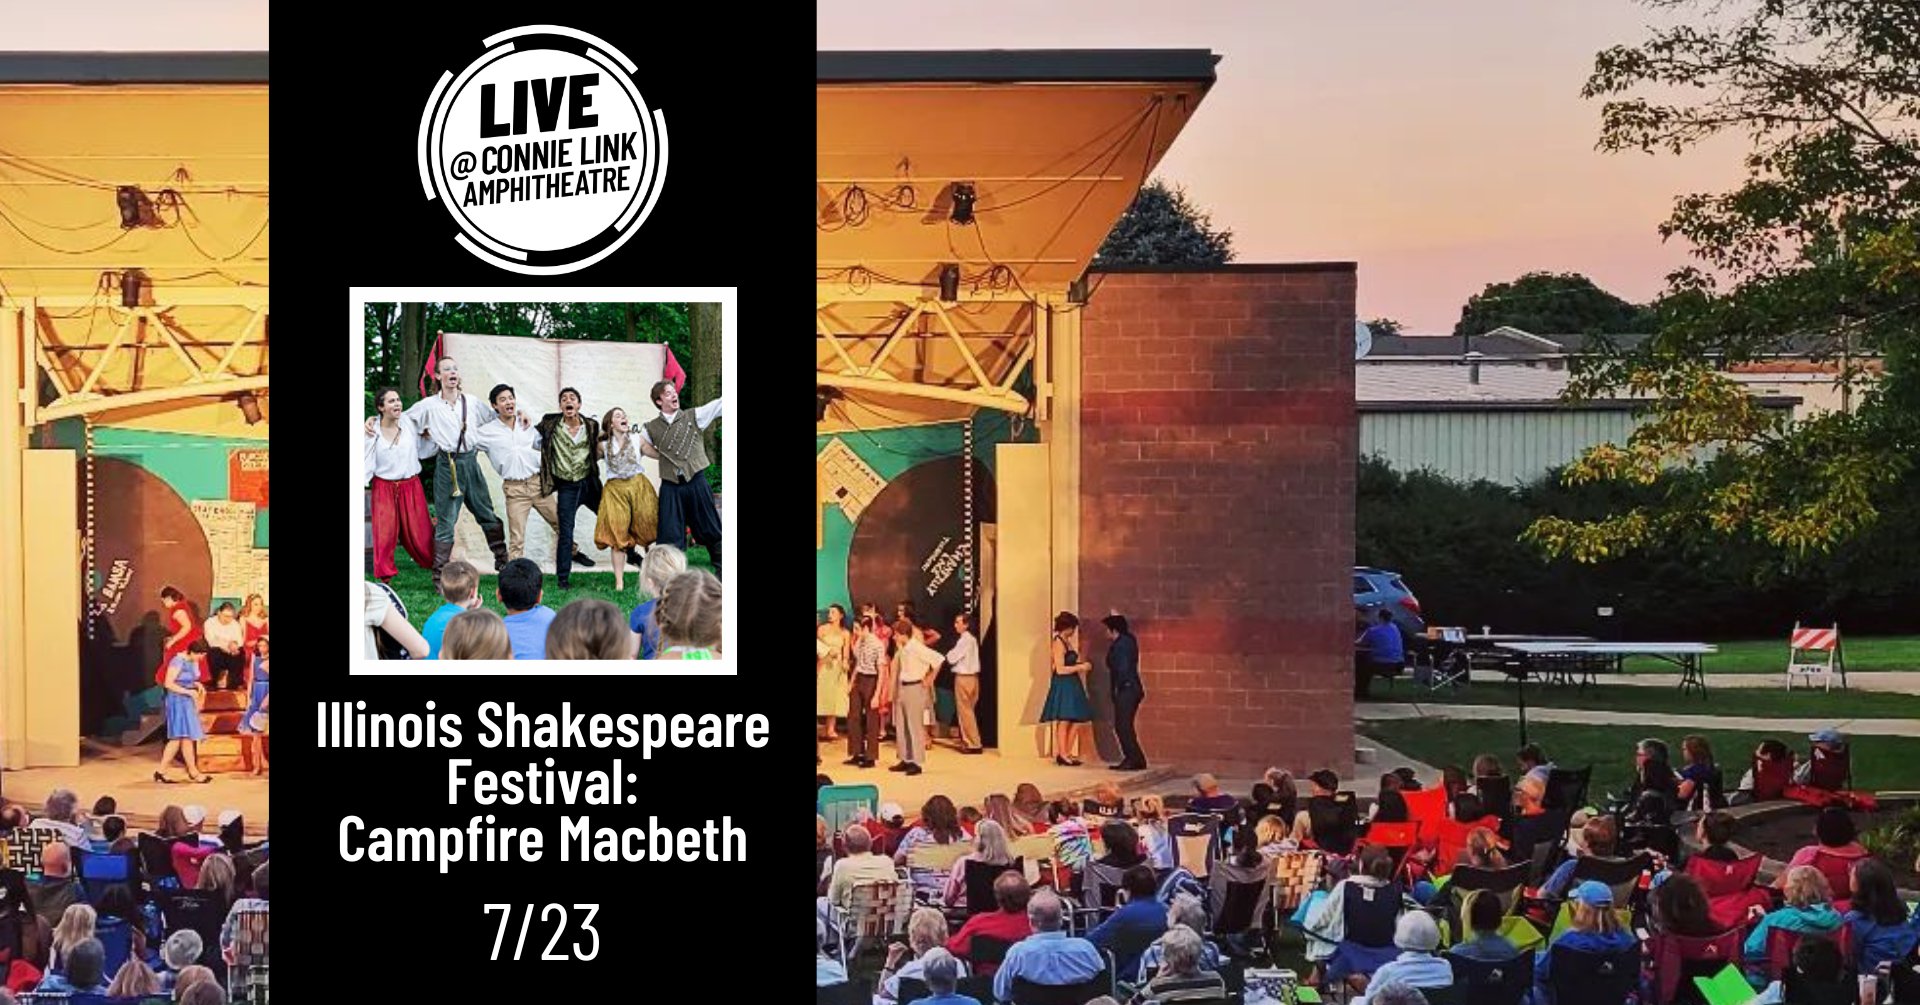 Terrific Tuesdays: Illinois Shakespeare Festival: Theatre for Young Audiences - Live @ Connie Link Amphitheatre